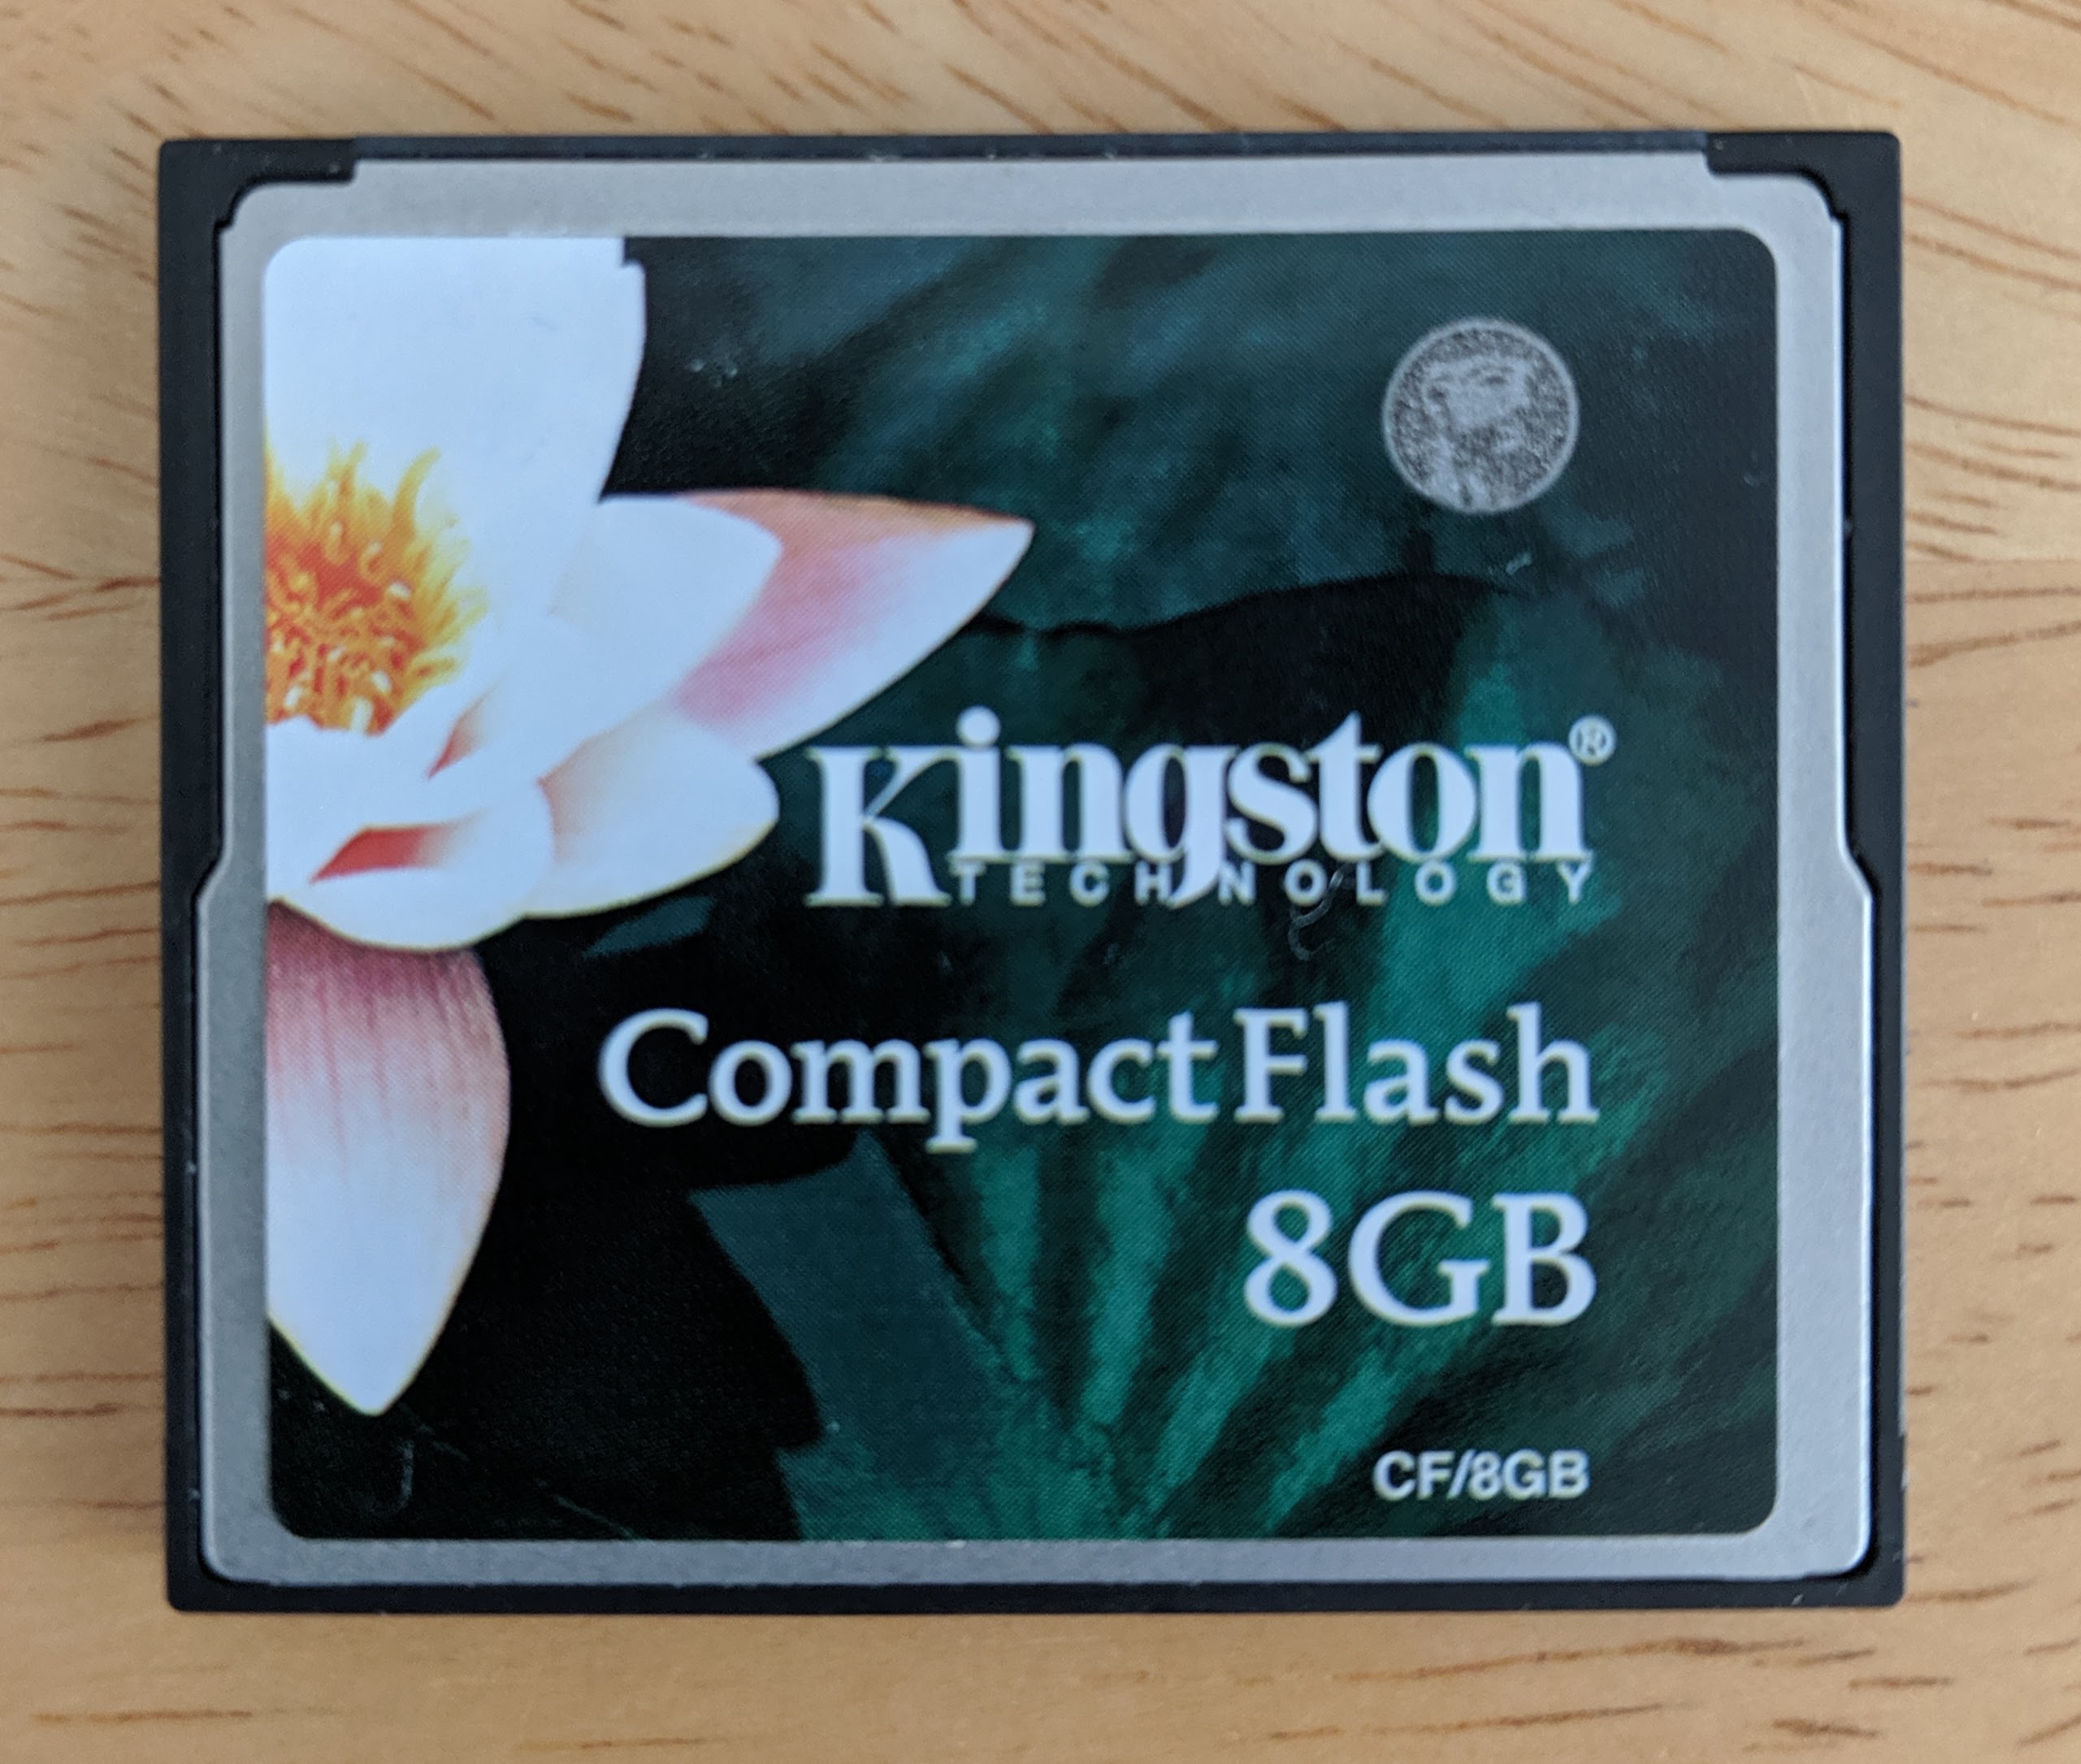 Kingston CompactFlash card